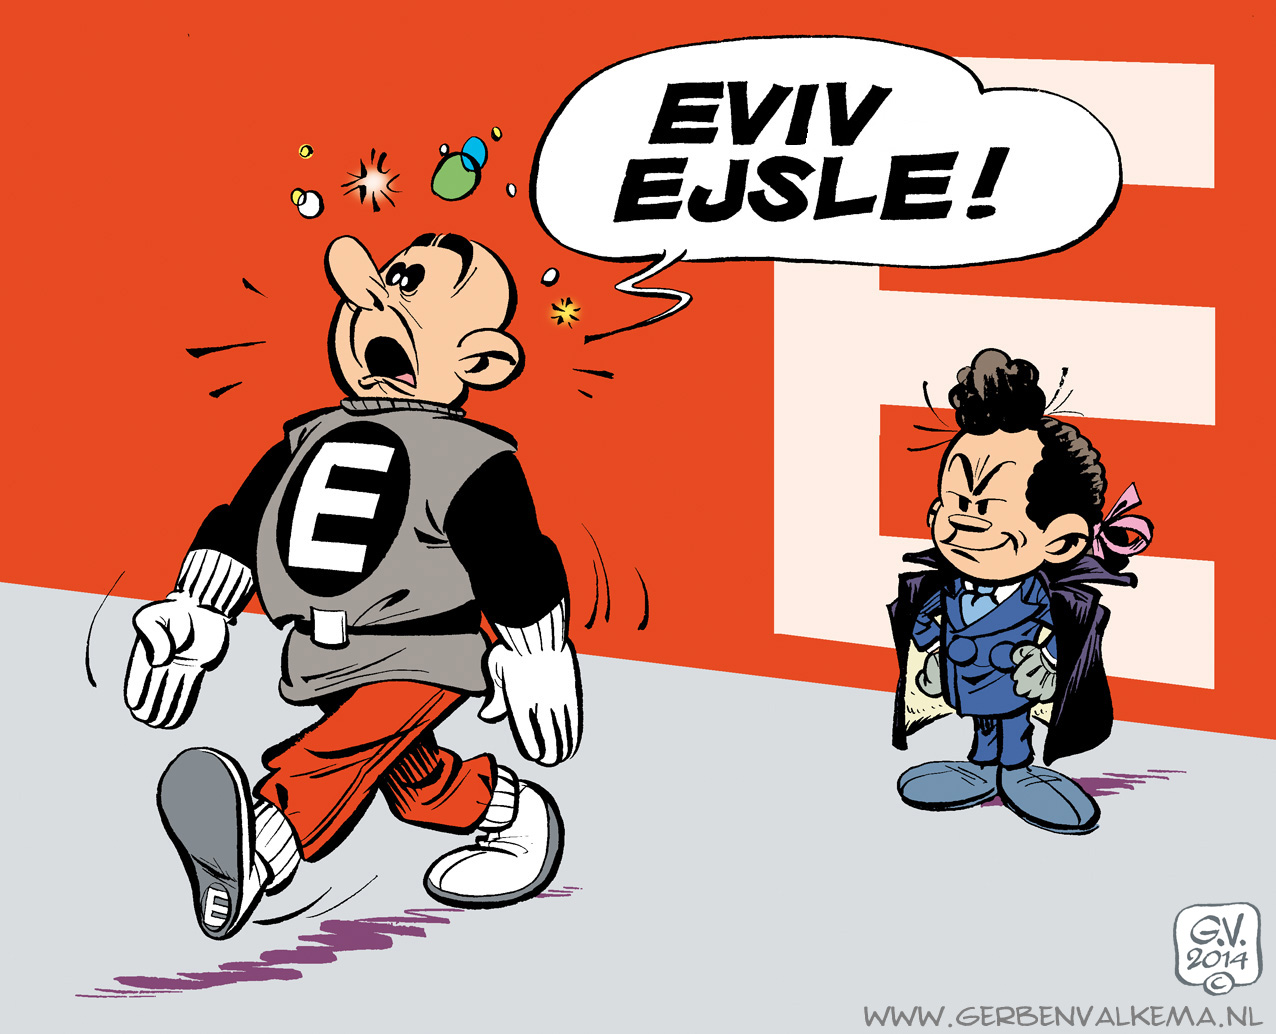 'Eviv Ejsle!' (ill. Gerben Valkema; (c) Dupuis and the artist)